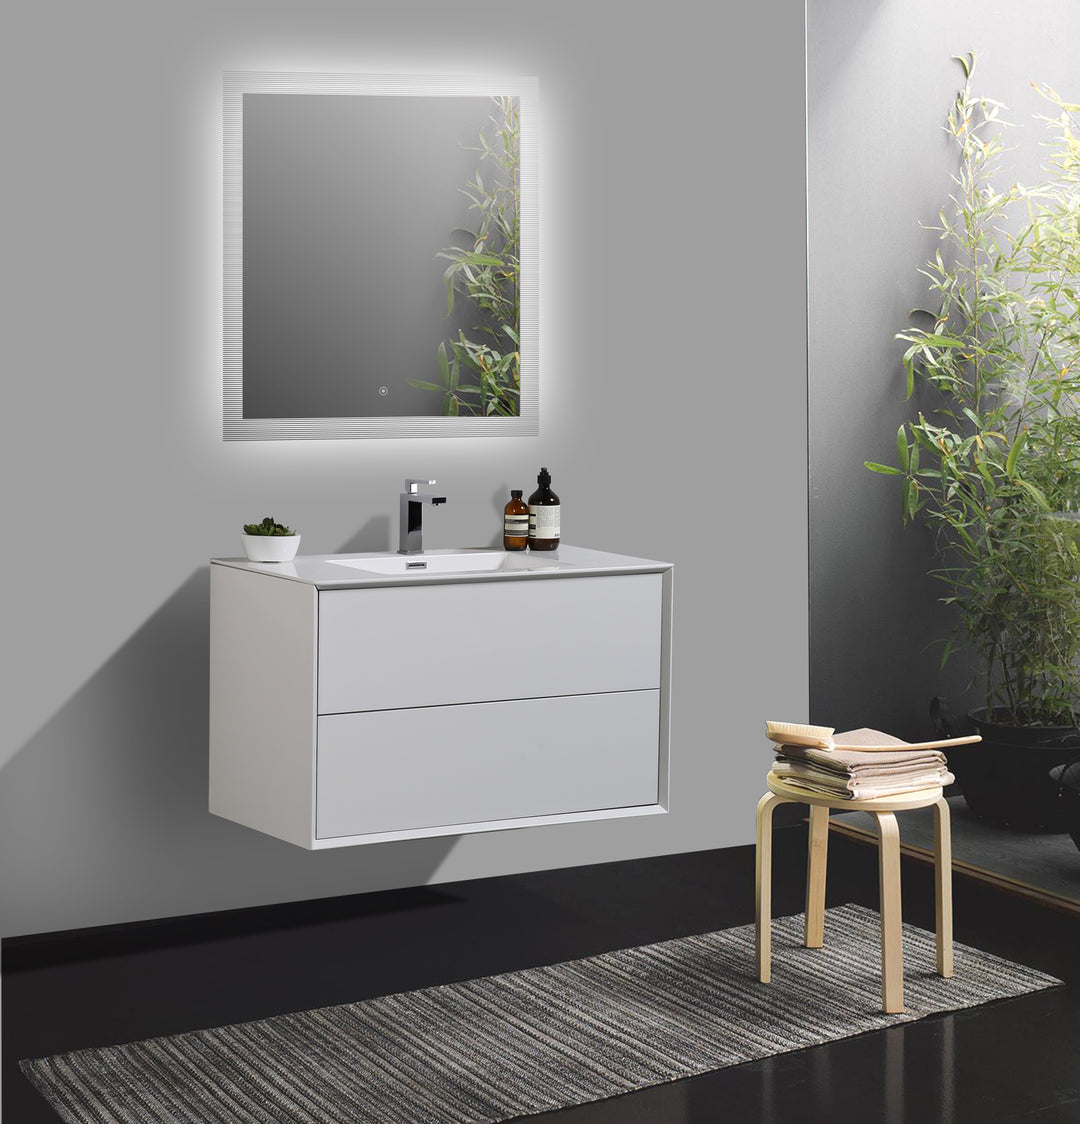 BAI 0853 Wall Hung 36-inch Bathroom Cabinet in Gloss White Finish